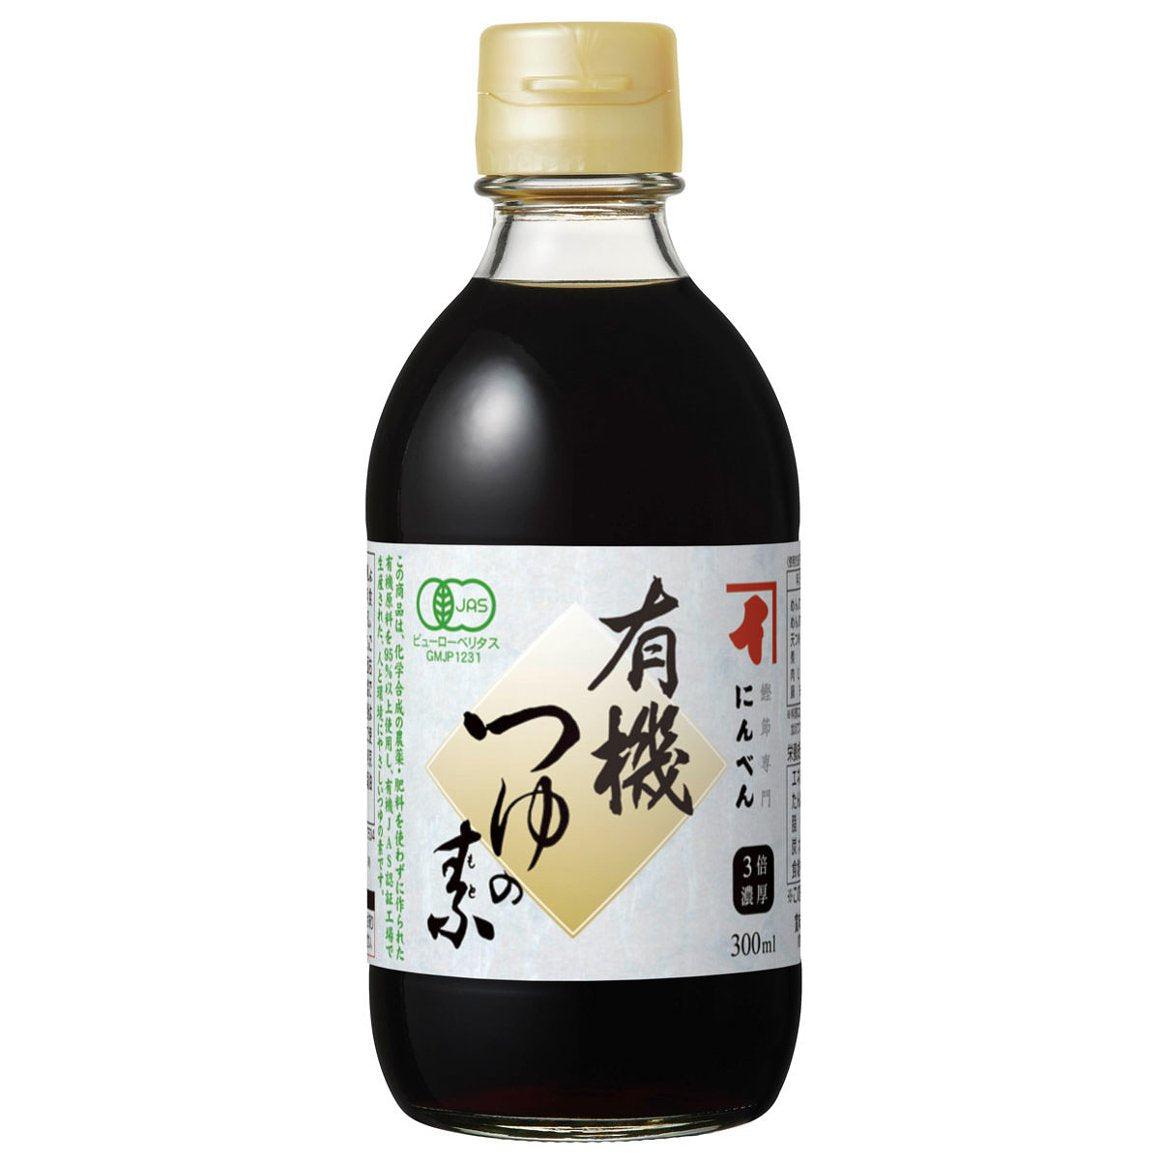 Ninben Organic Tsuyu Japanese Concentrated Soup Base 300ml